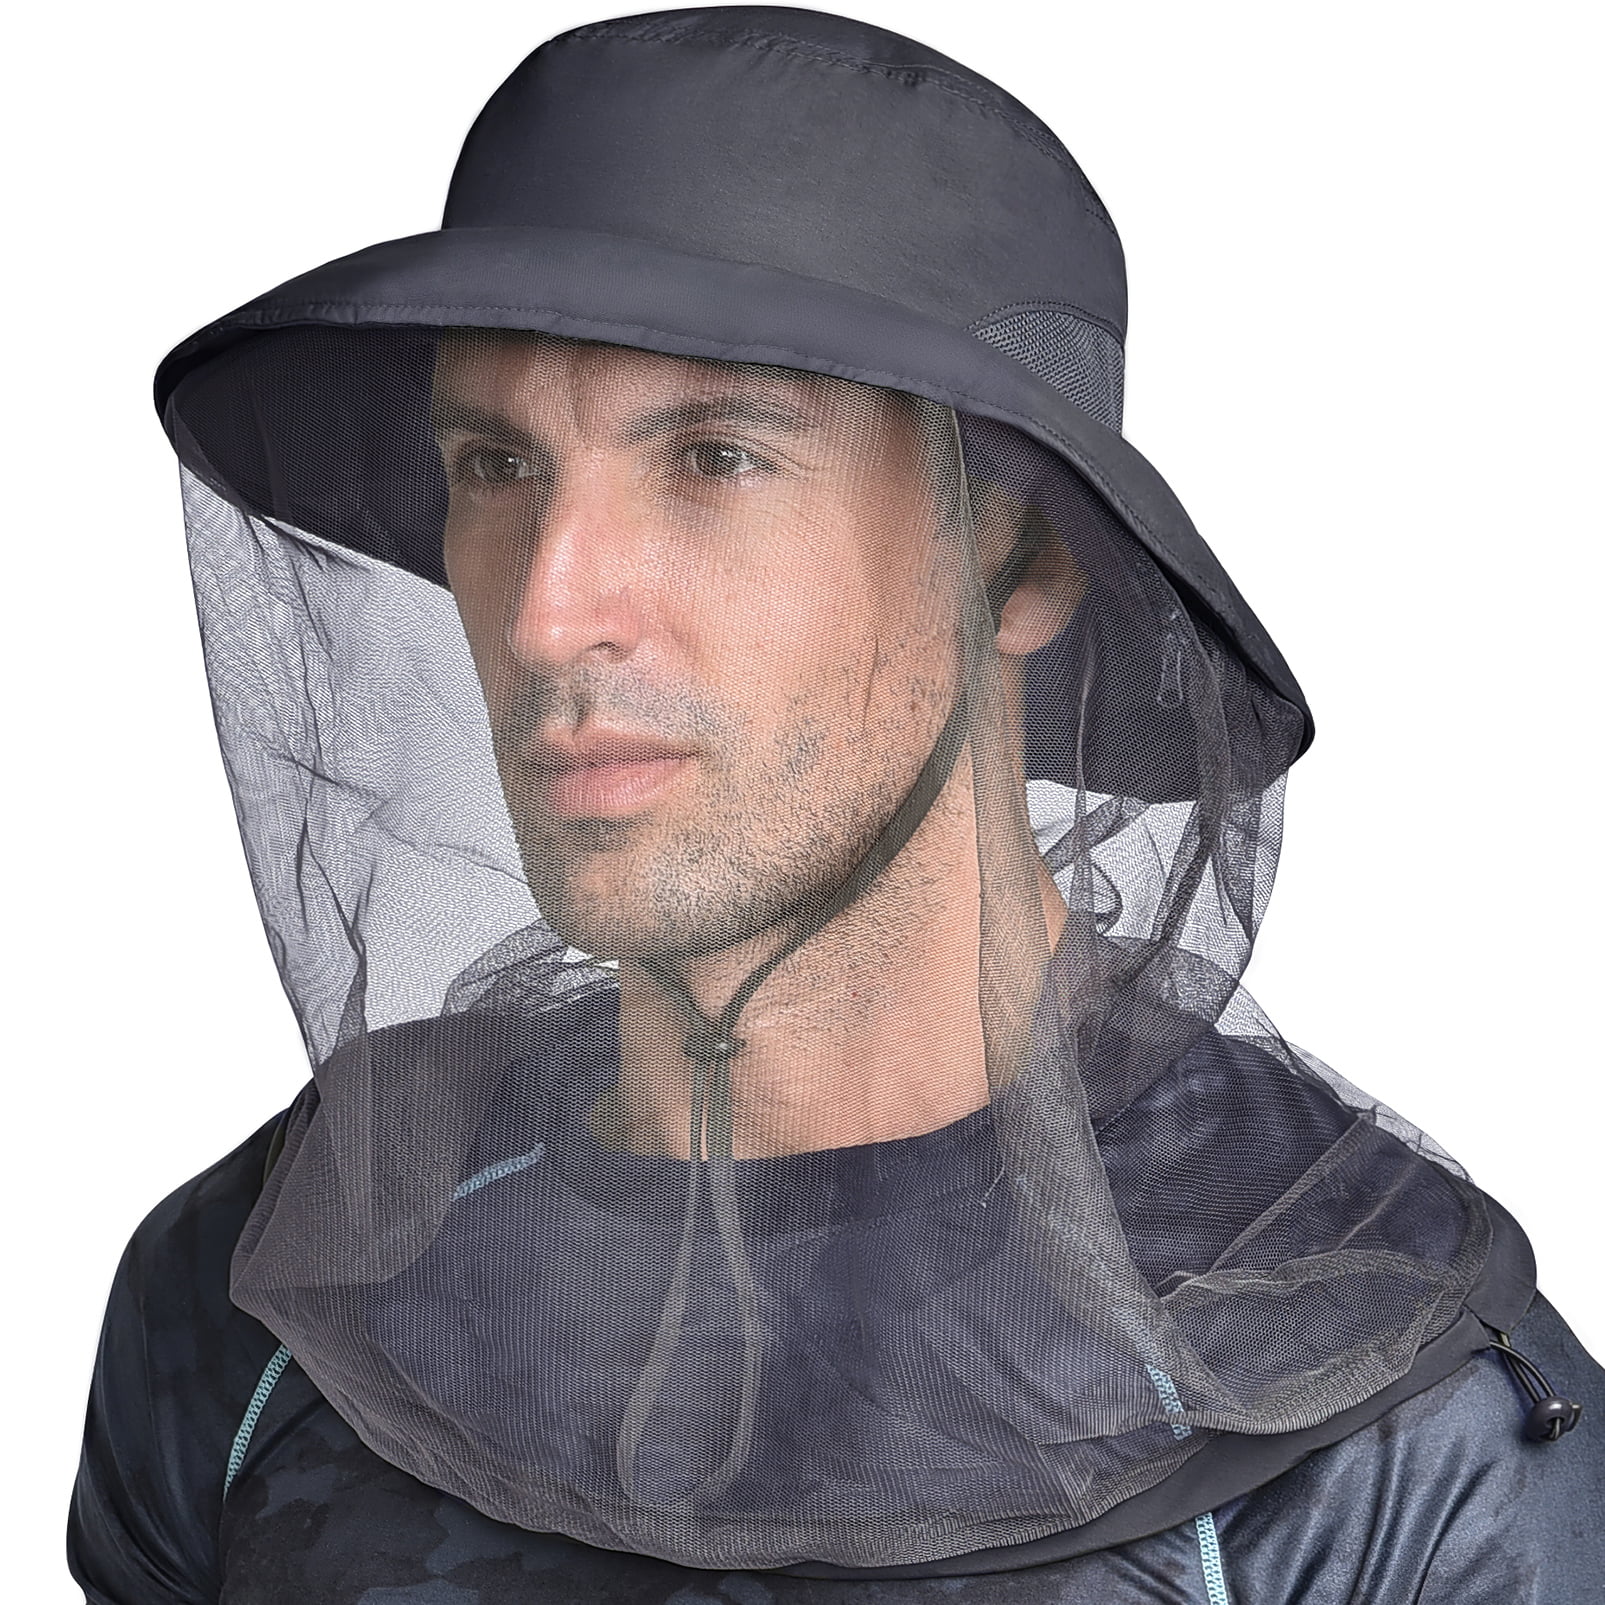 Outdoor 50 UPF-UV Full Sun Protection Cover Fishing Hiking Travel Floppy Hat Cap 